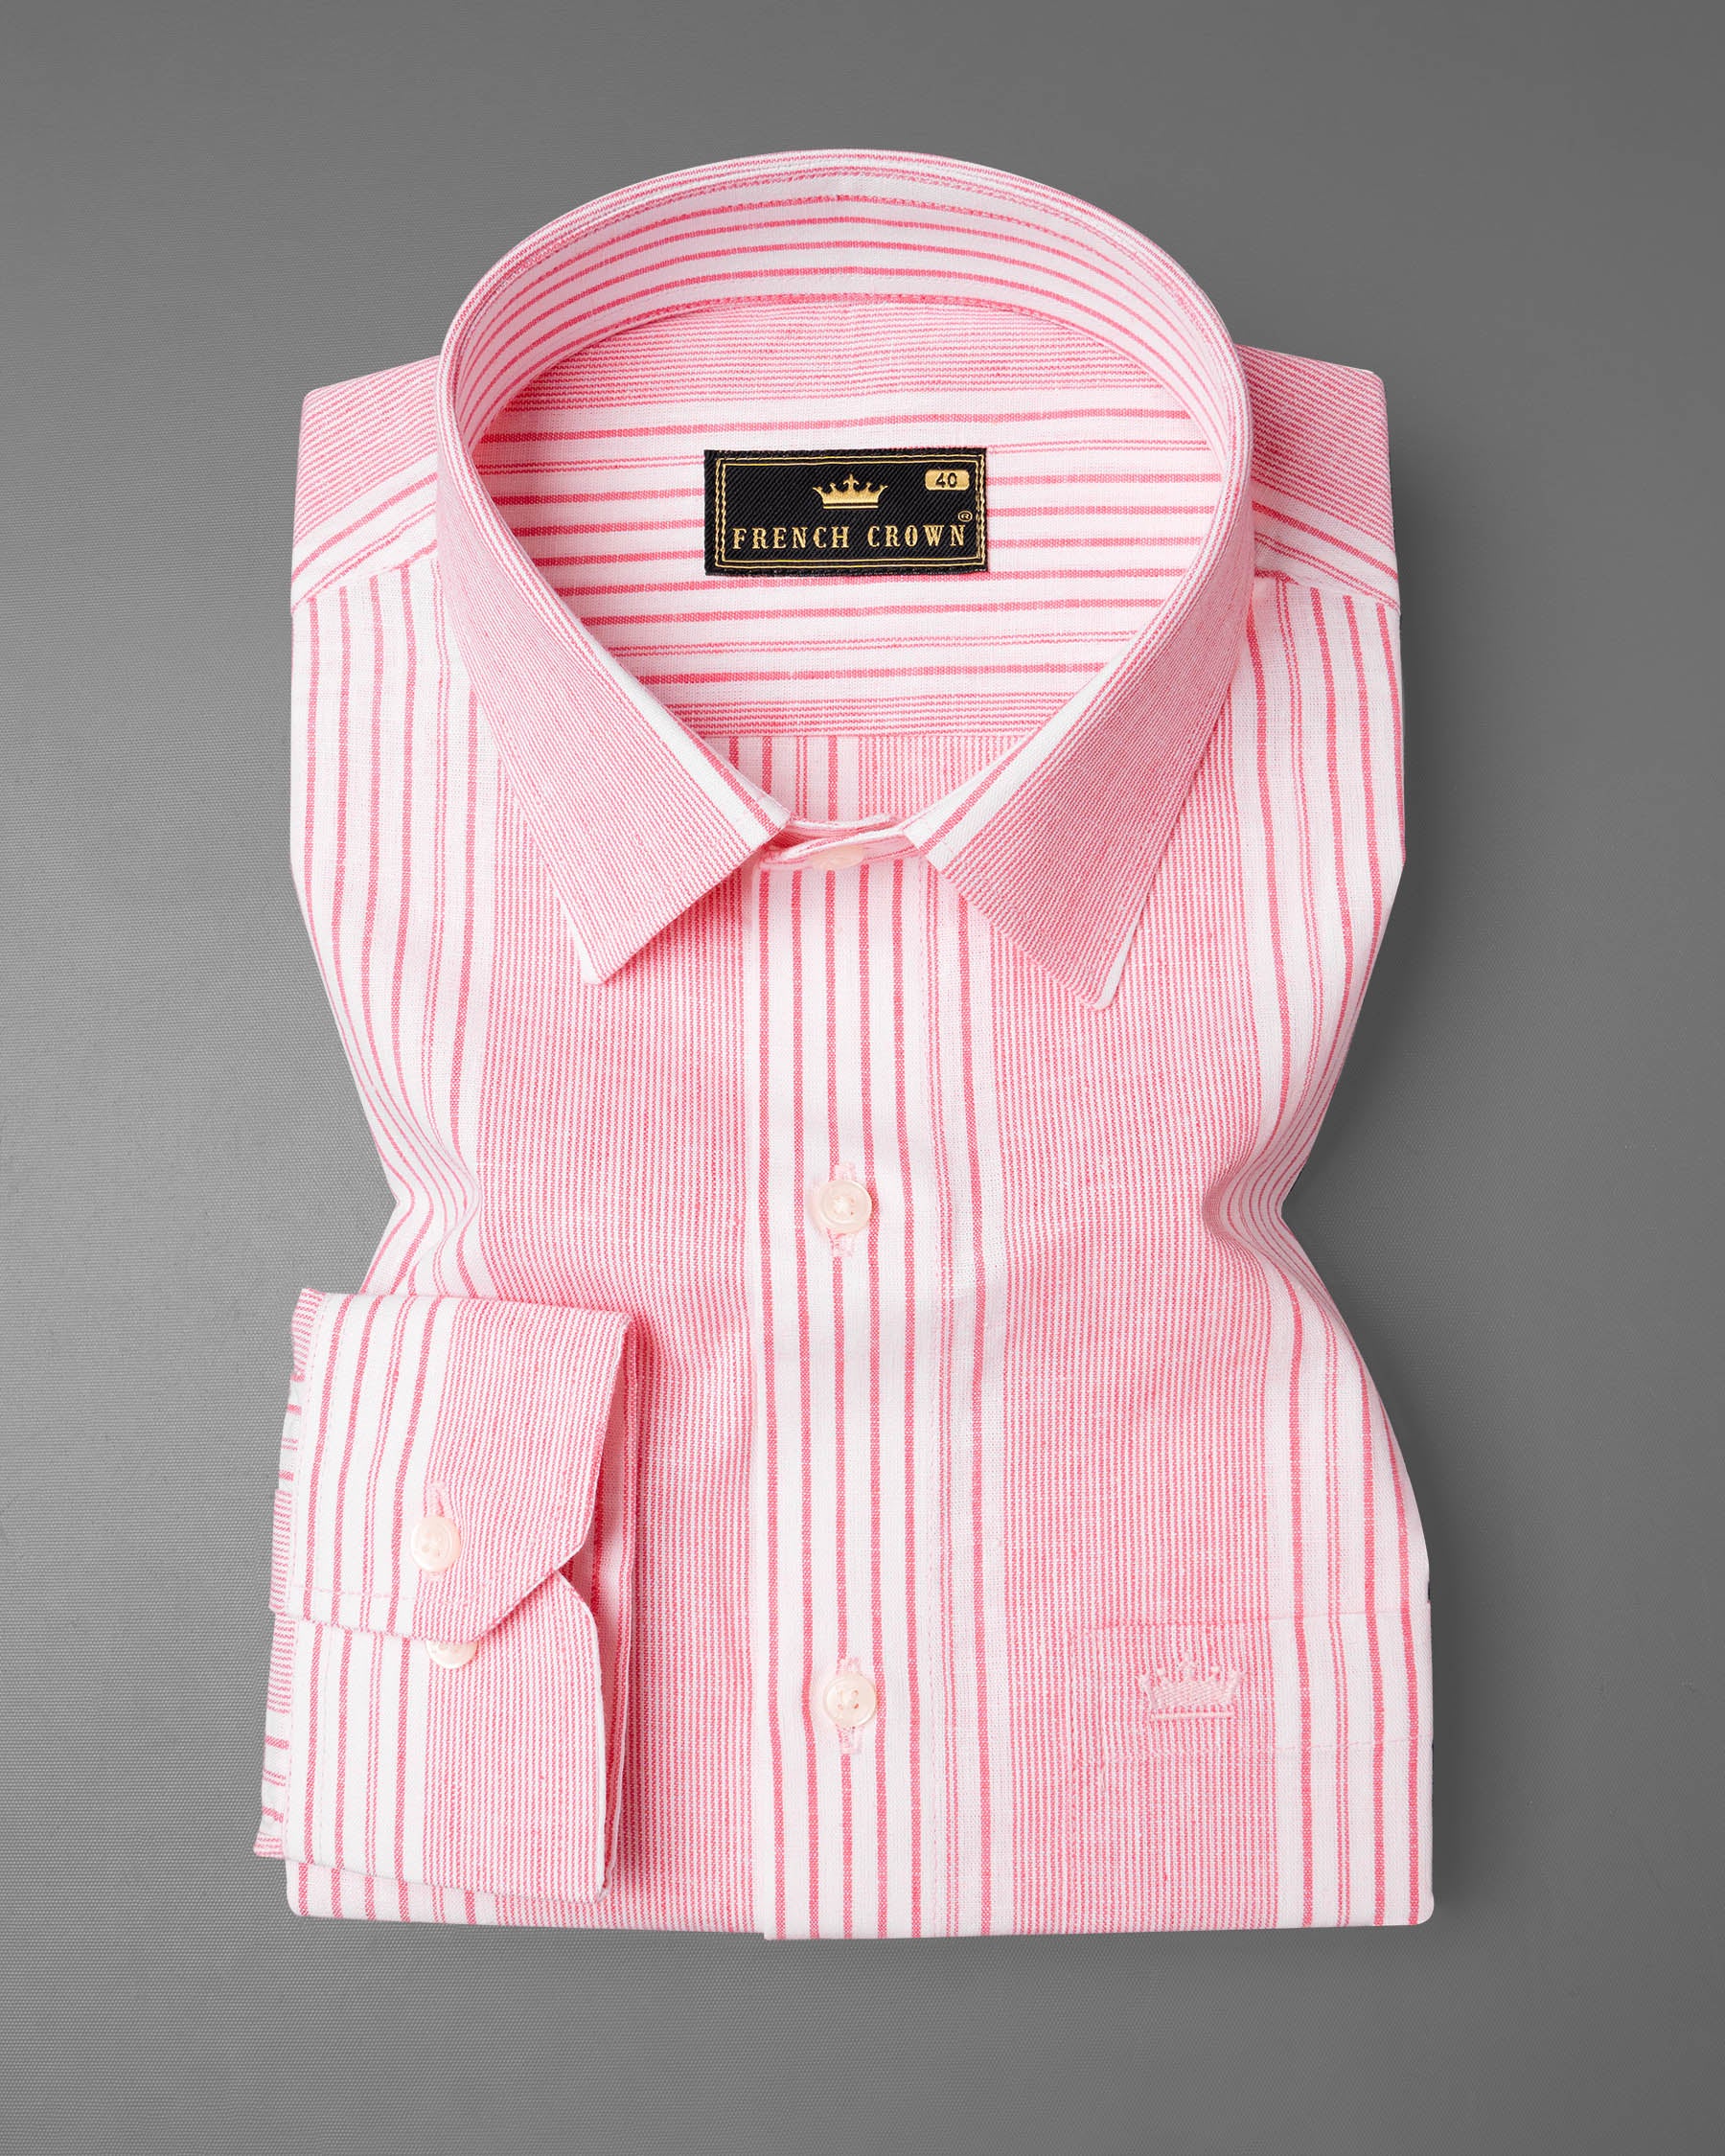 Froly Pink Striped Luxurious Linen Shirt 6936-38,6936-38,6936-39,6936-39,6936-40,6936-40,6936-42,6936-42,6936-44,6936-44,6936-46,6936-46,6936-48,6936-48,6936-50,6936-50,6936-52,6936-52